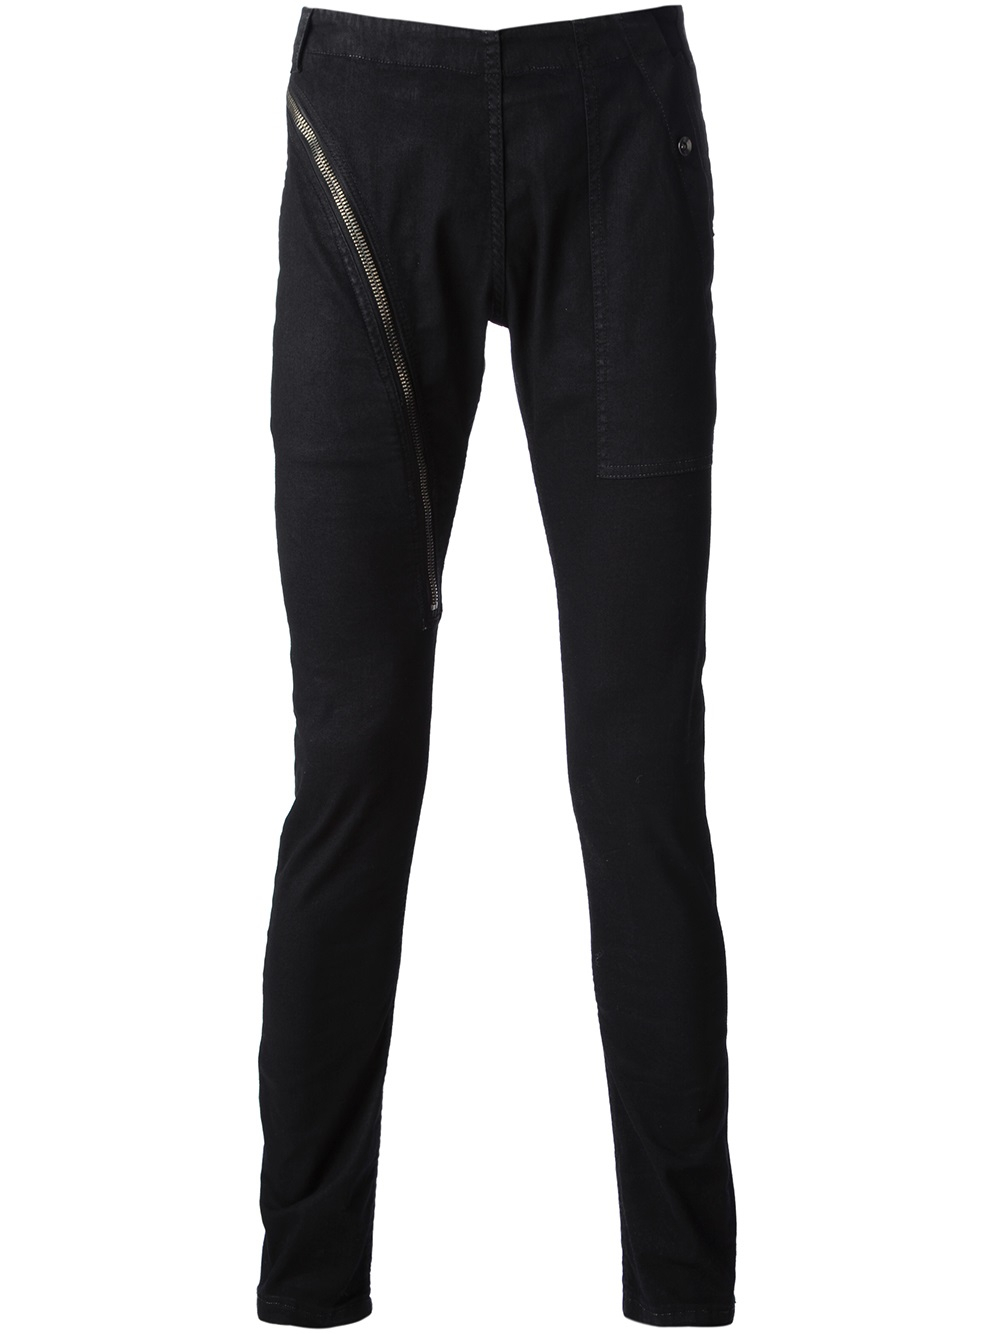 Rick Owens DRKSHDW Aircut Jeans in Black for Men - Lyst